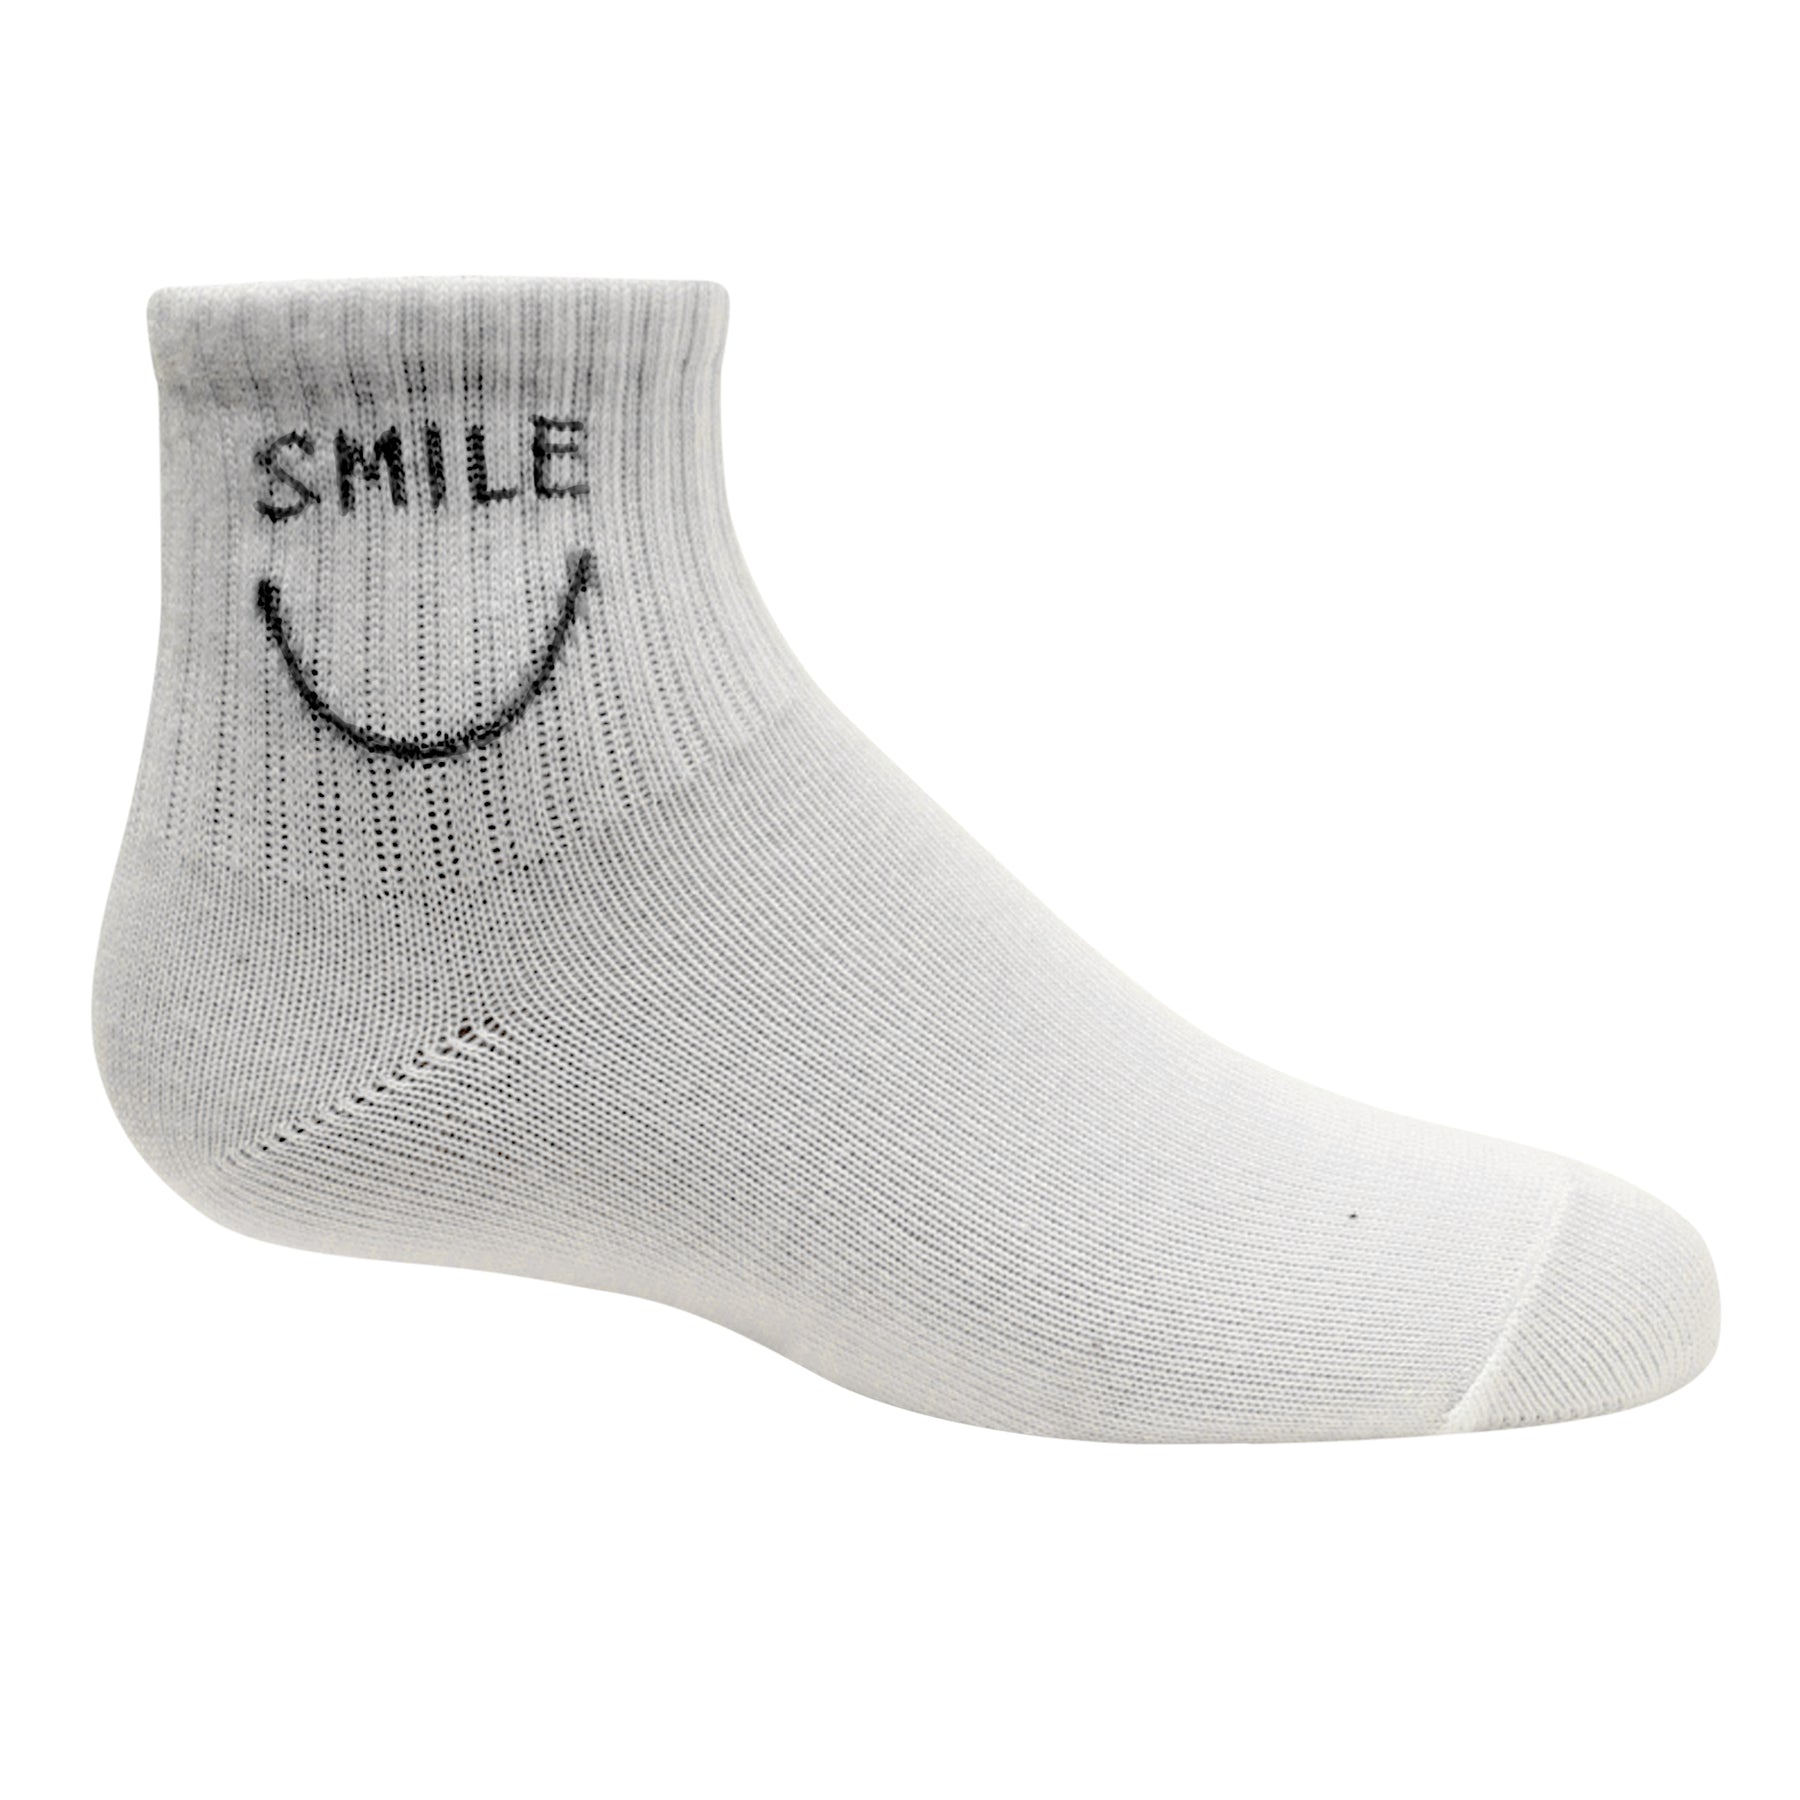 Smile Sport Ankle